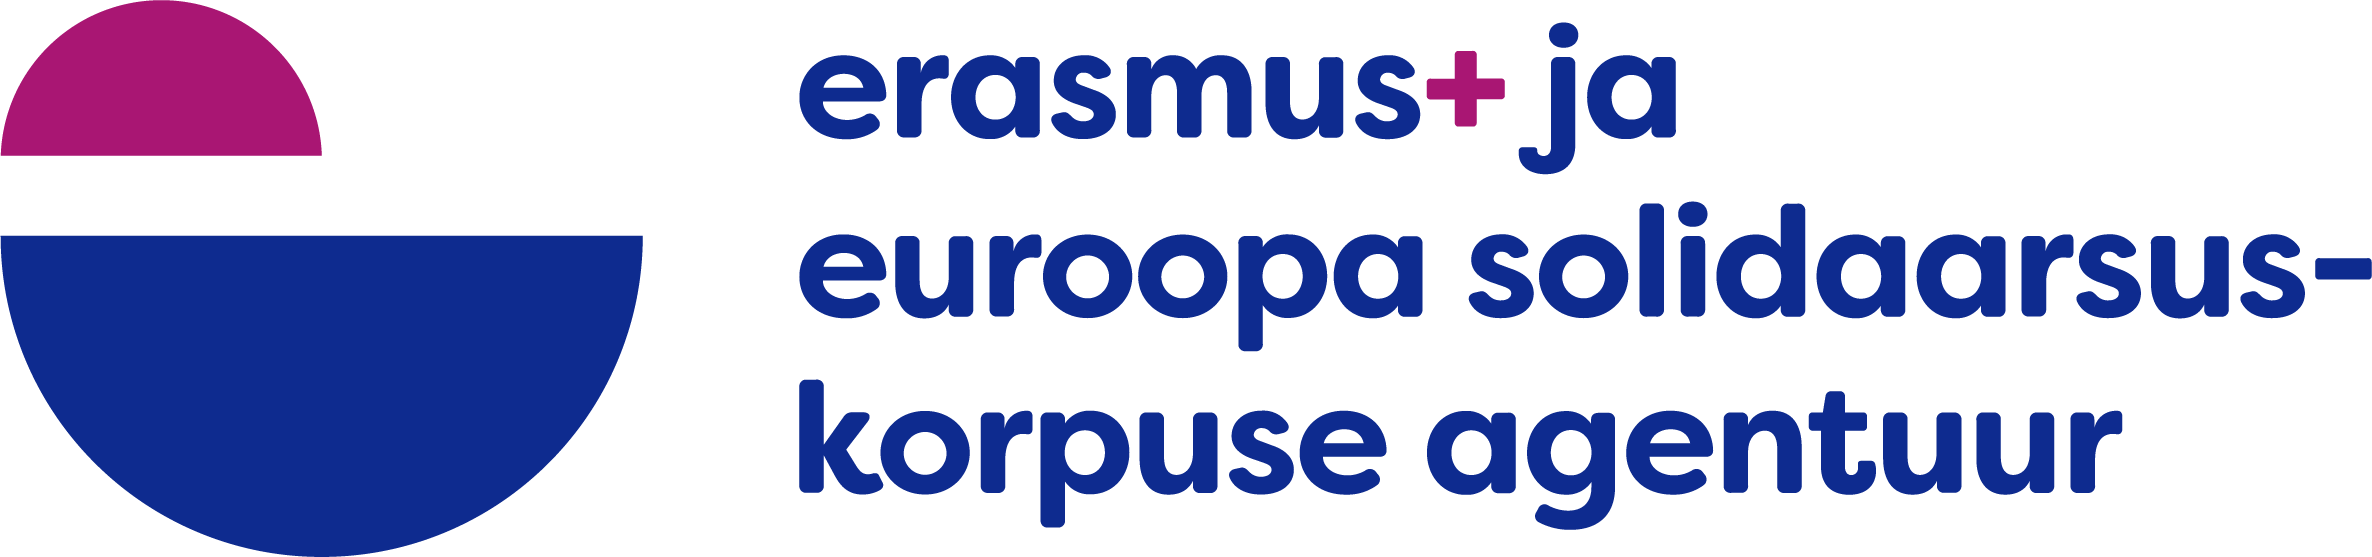 Erasmus+ and European Solidarity Corps Estonian Agency or National Agency logo